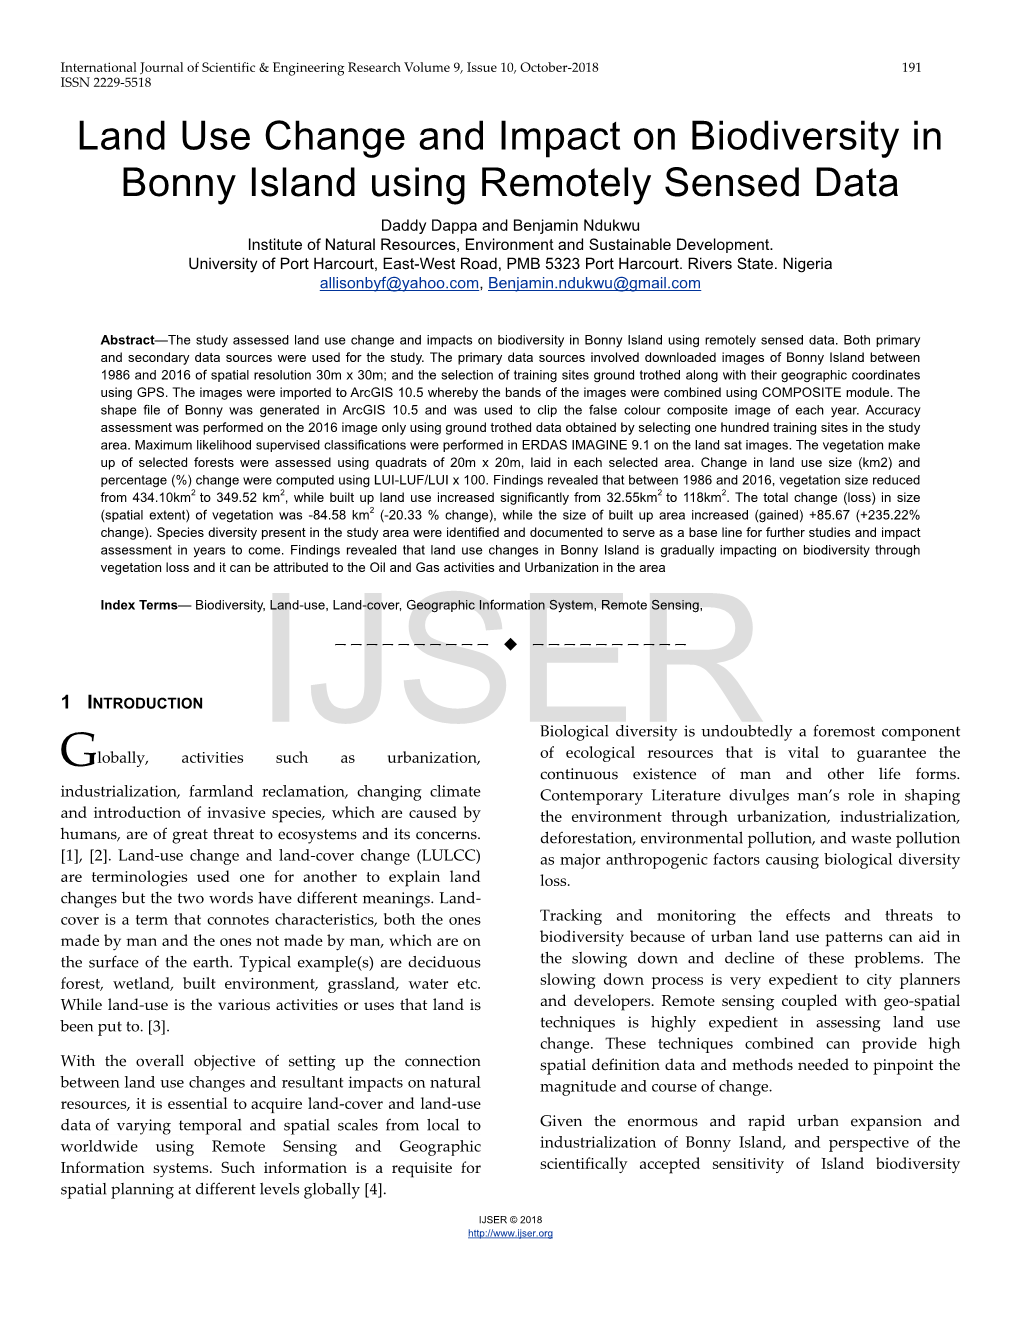 Land Use Change and Impact on Biodiversity in Bonny Island